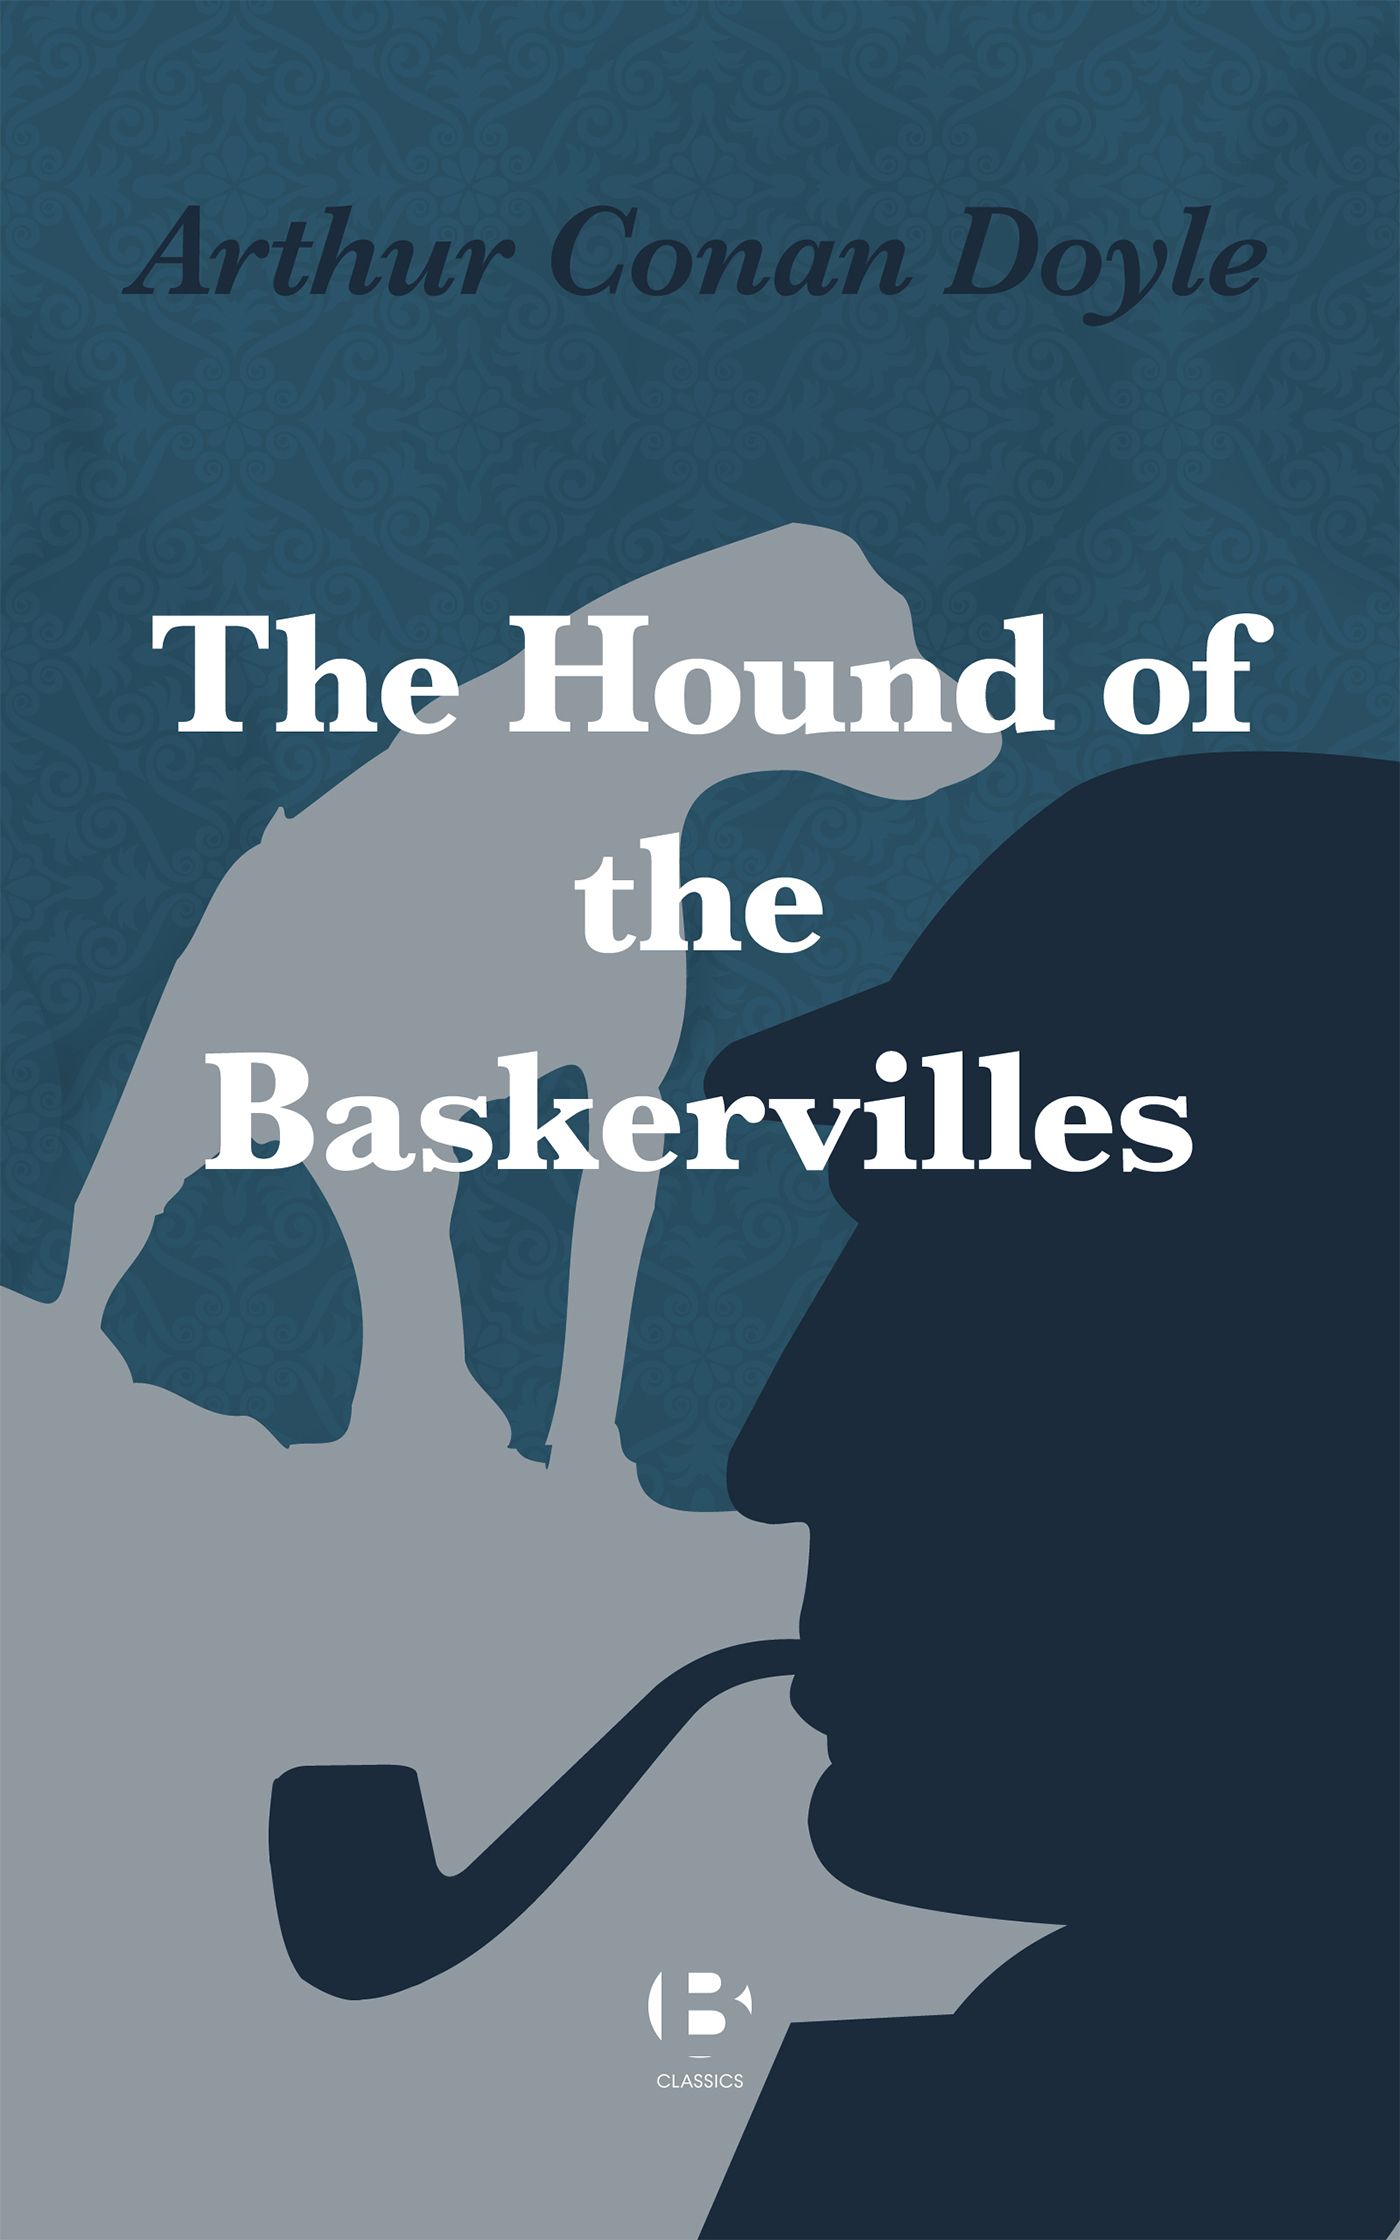 The Hound of the Baskervilles, eBook by Arthur Conan Doyle